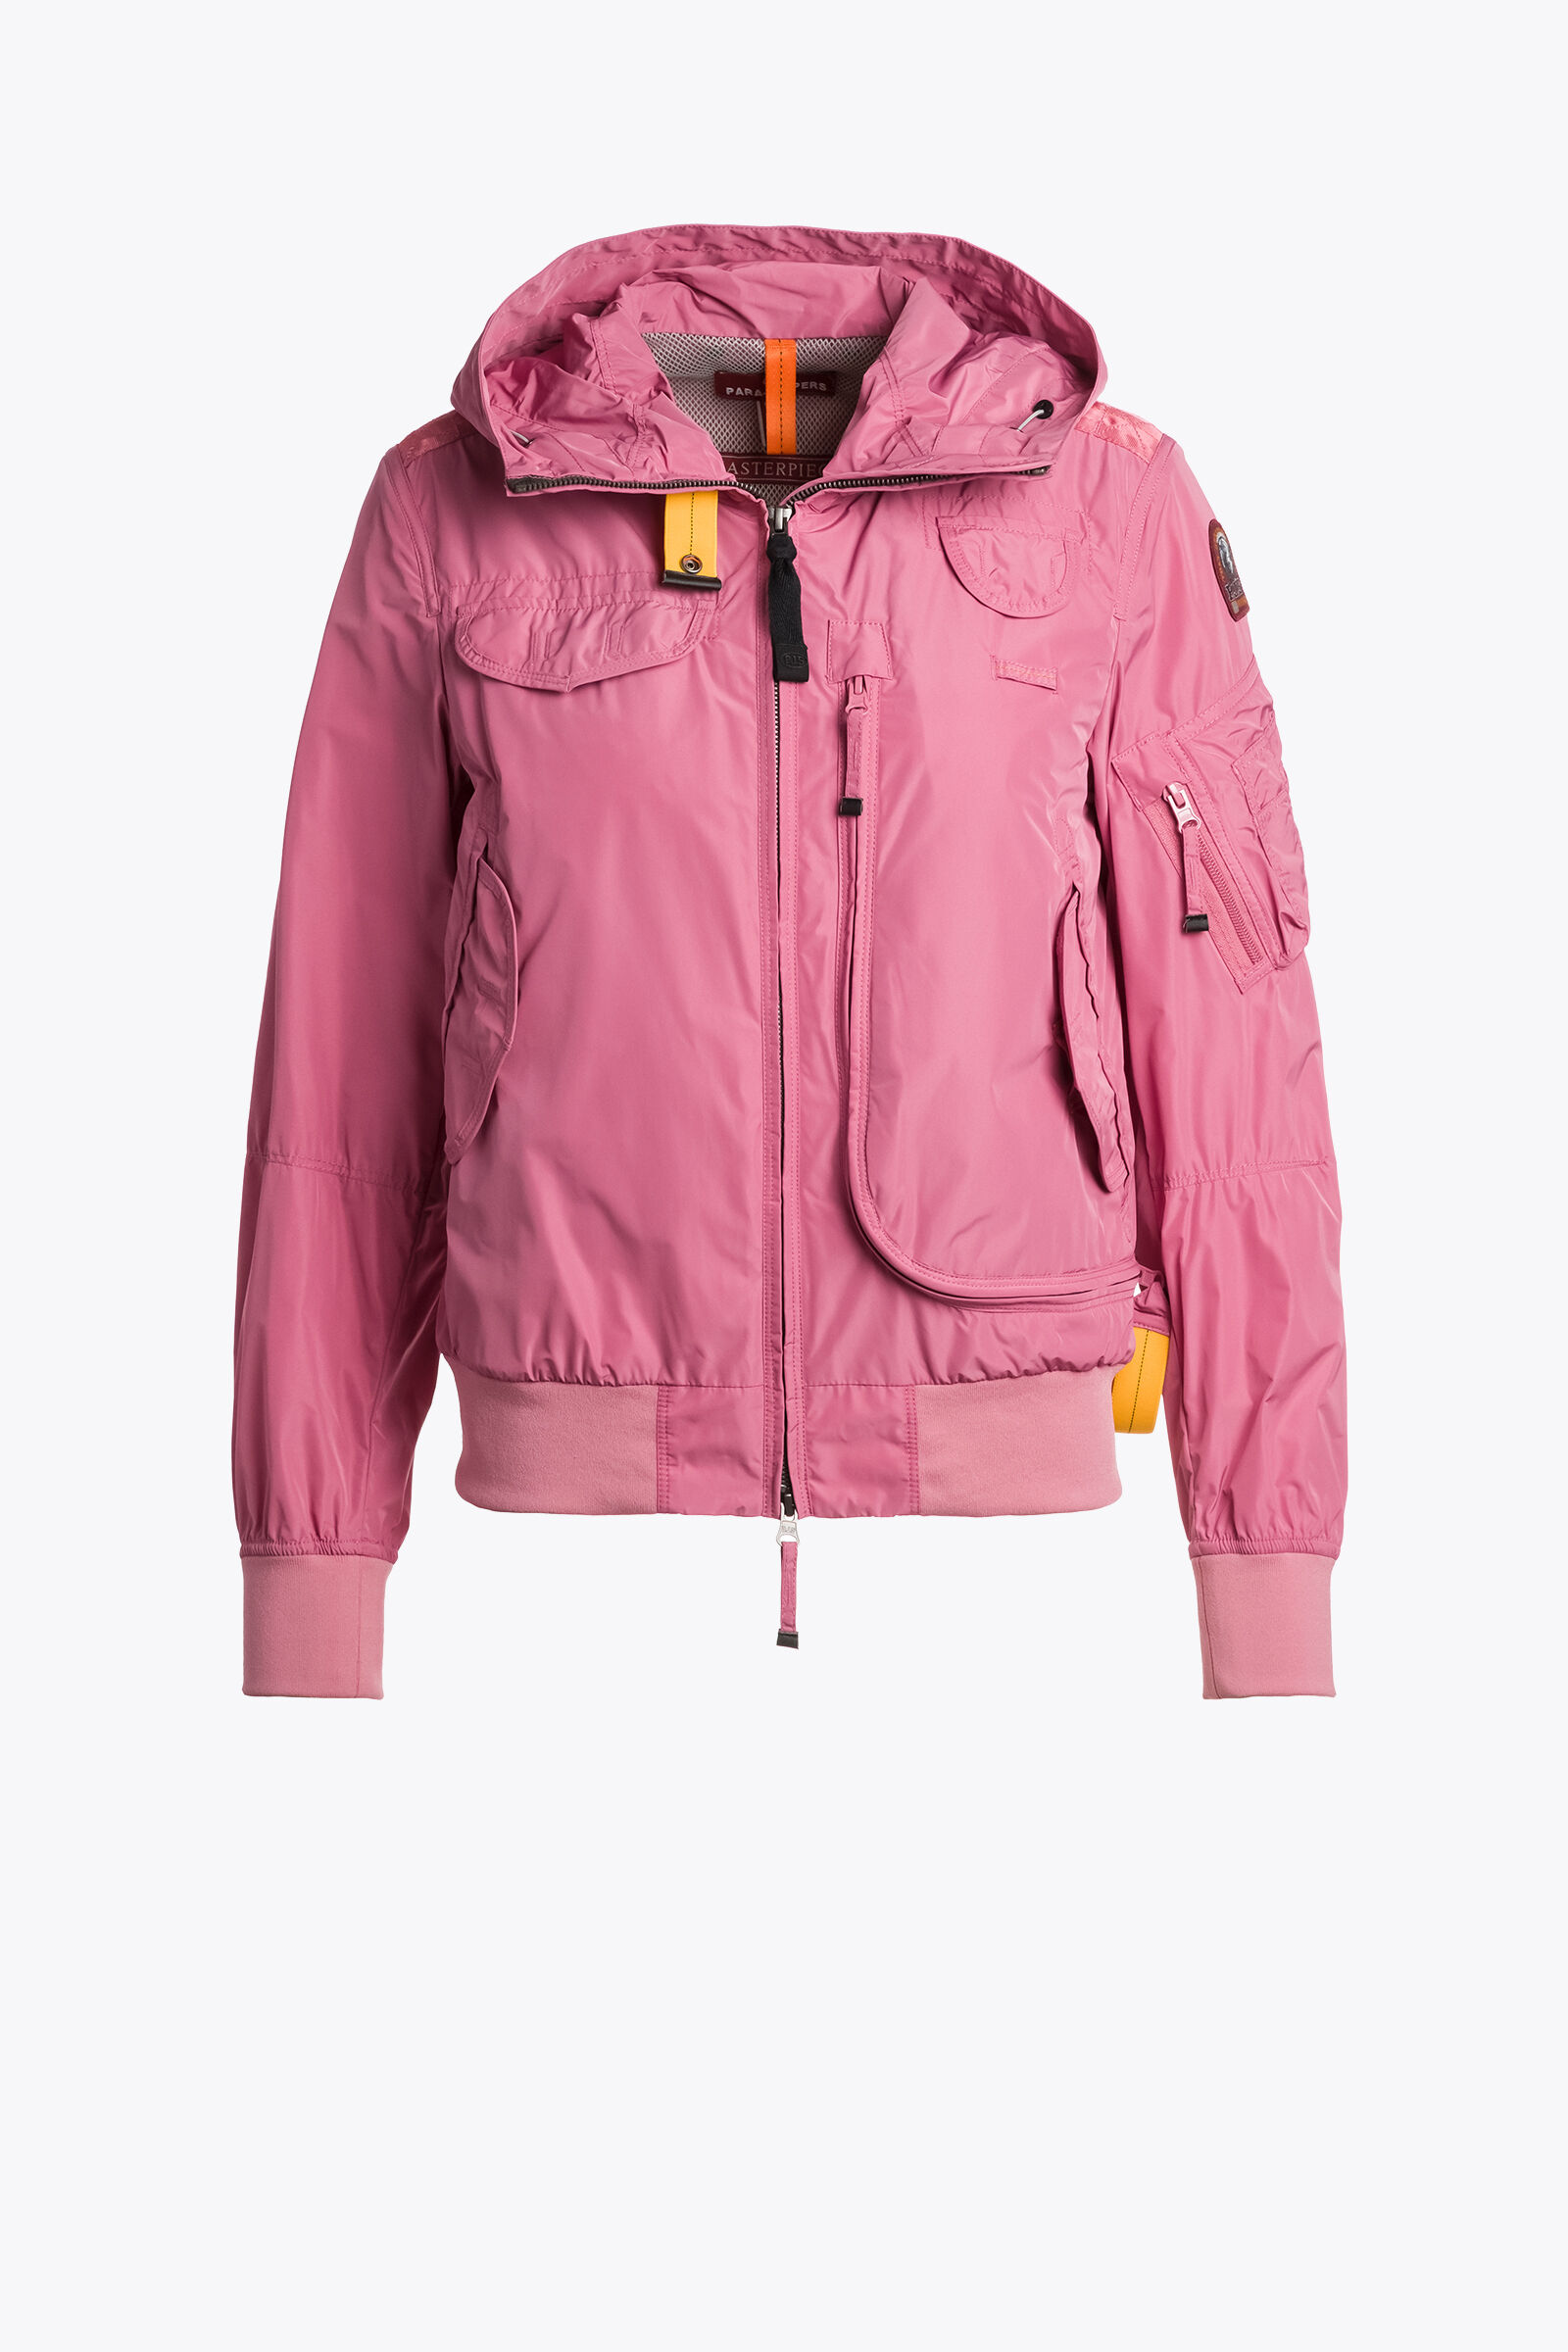 GOBI SPRING Jackets in ANTIQUE ROSE | Parajumpers®